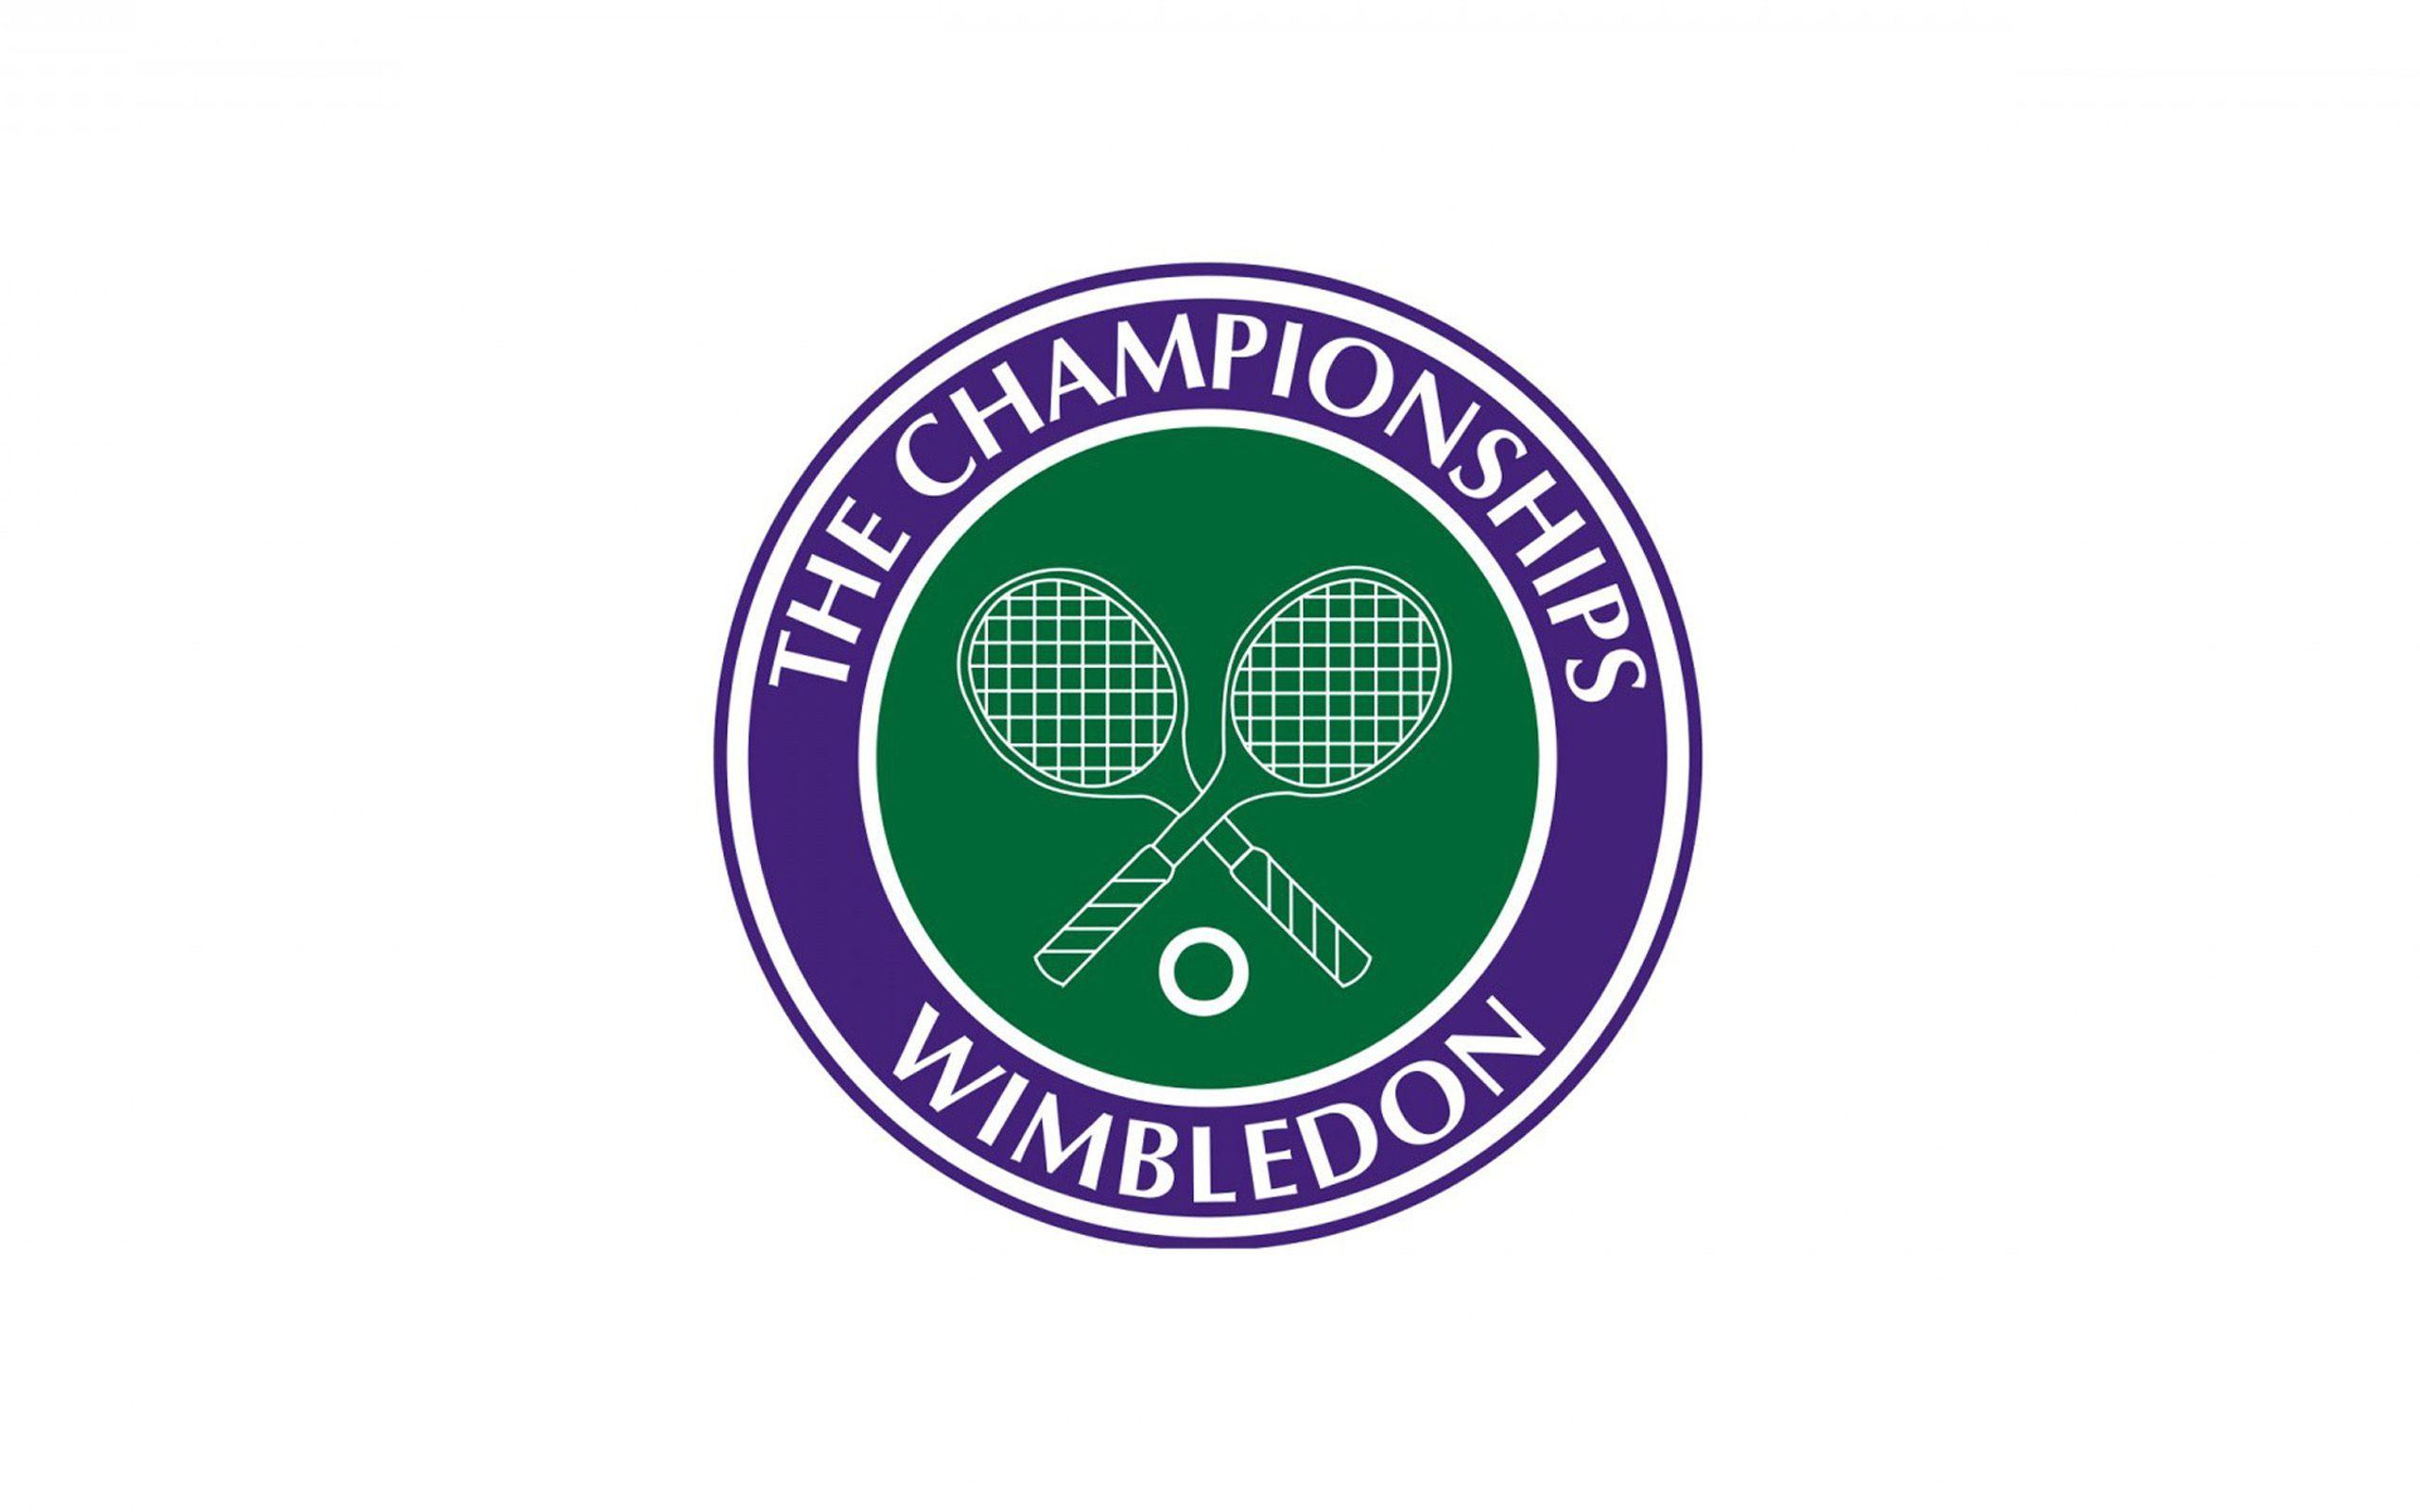 Wimbledon logo Wallpaper HD. Logopedia